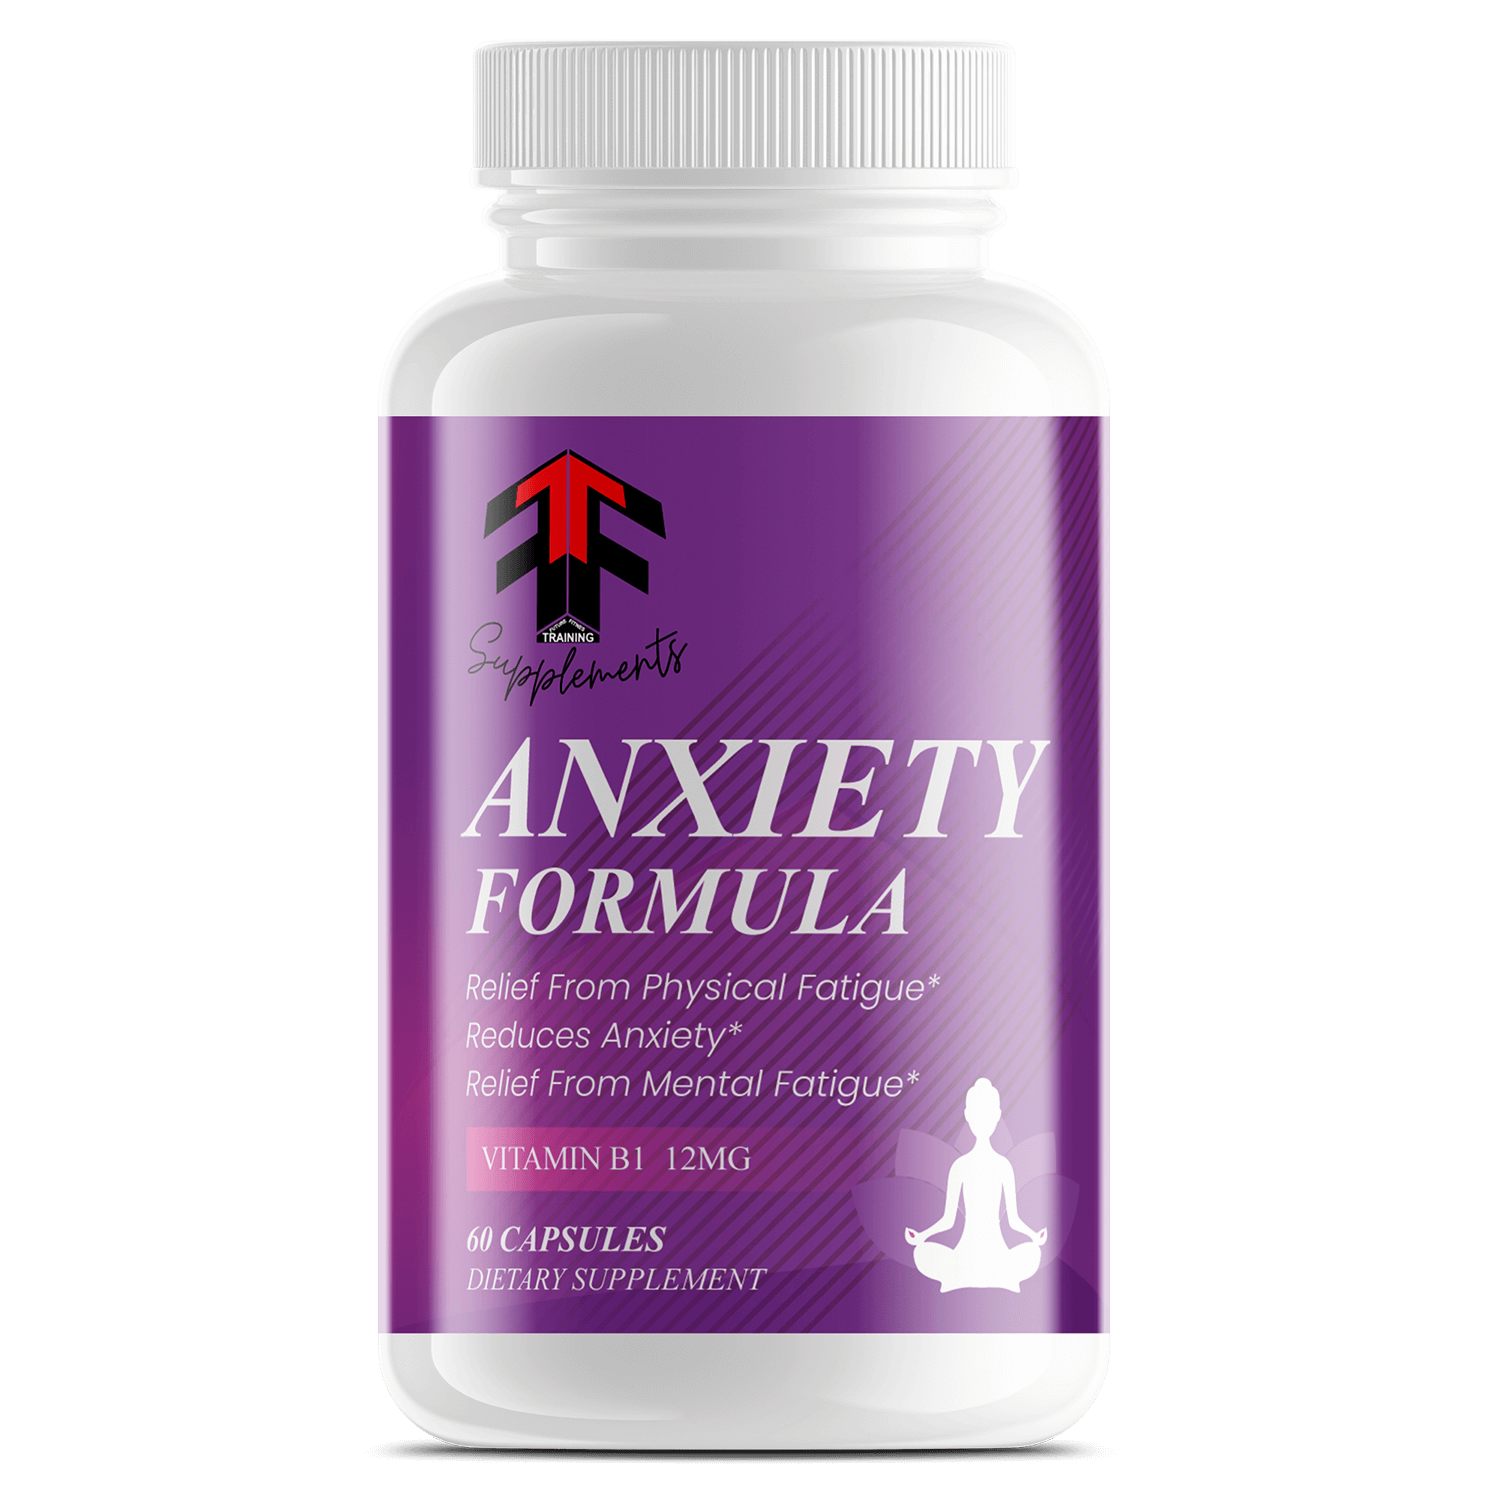 Anxiety Formula